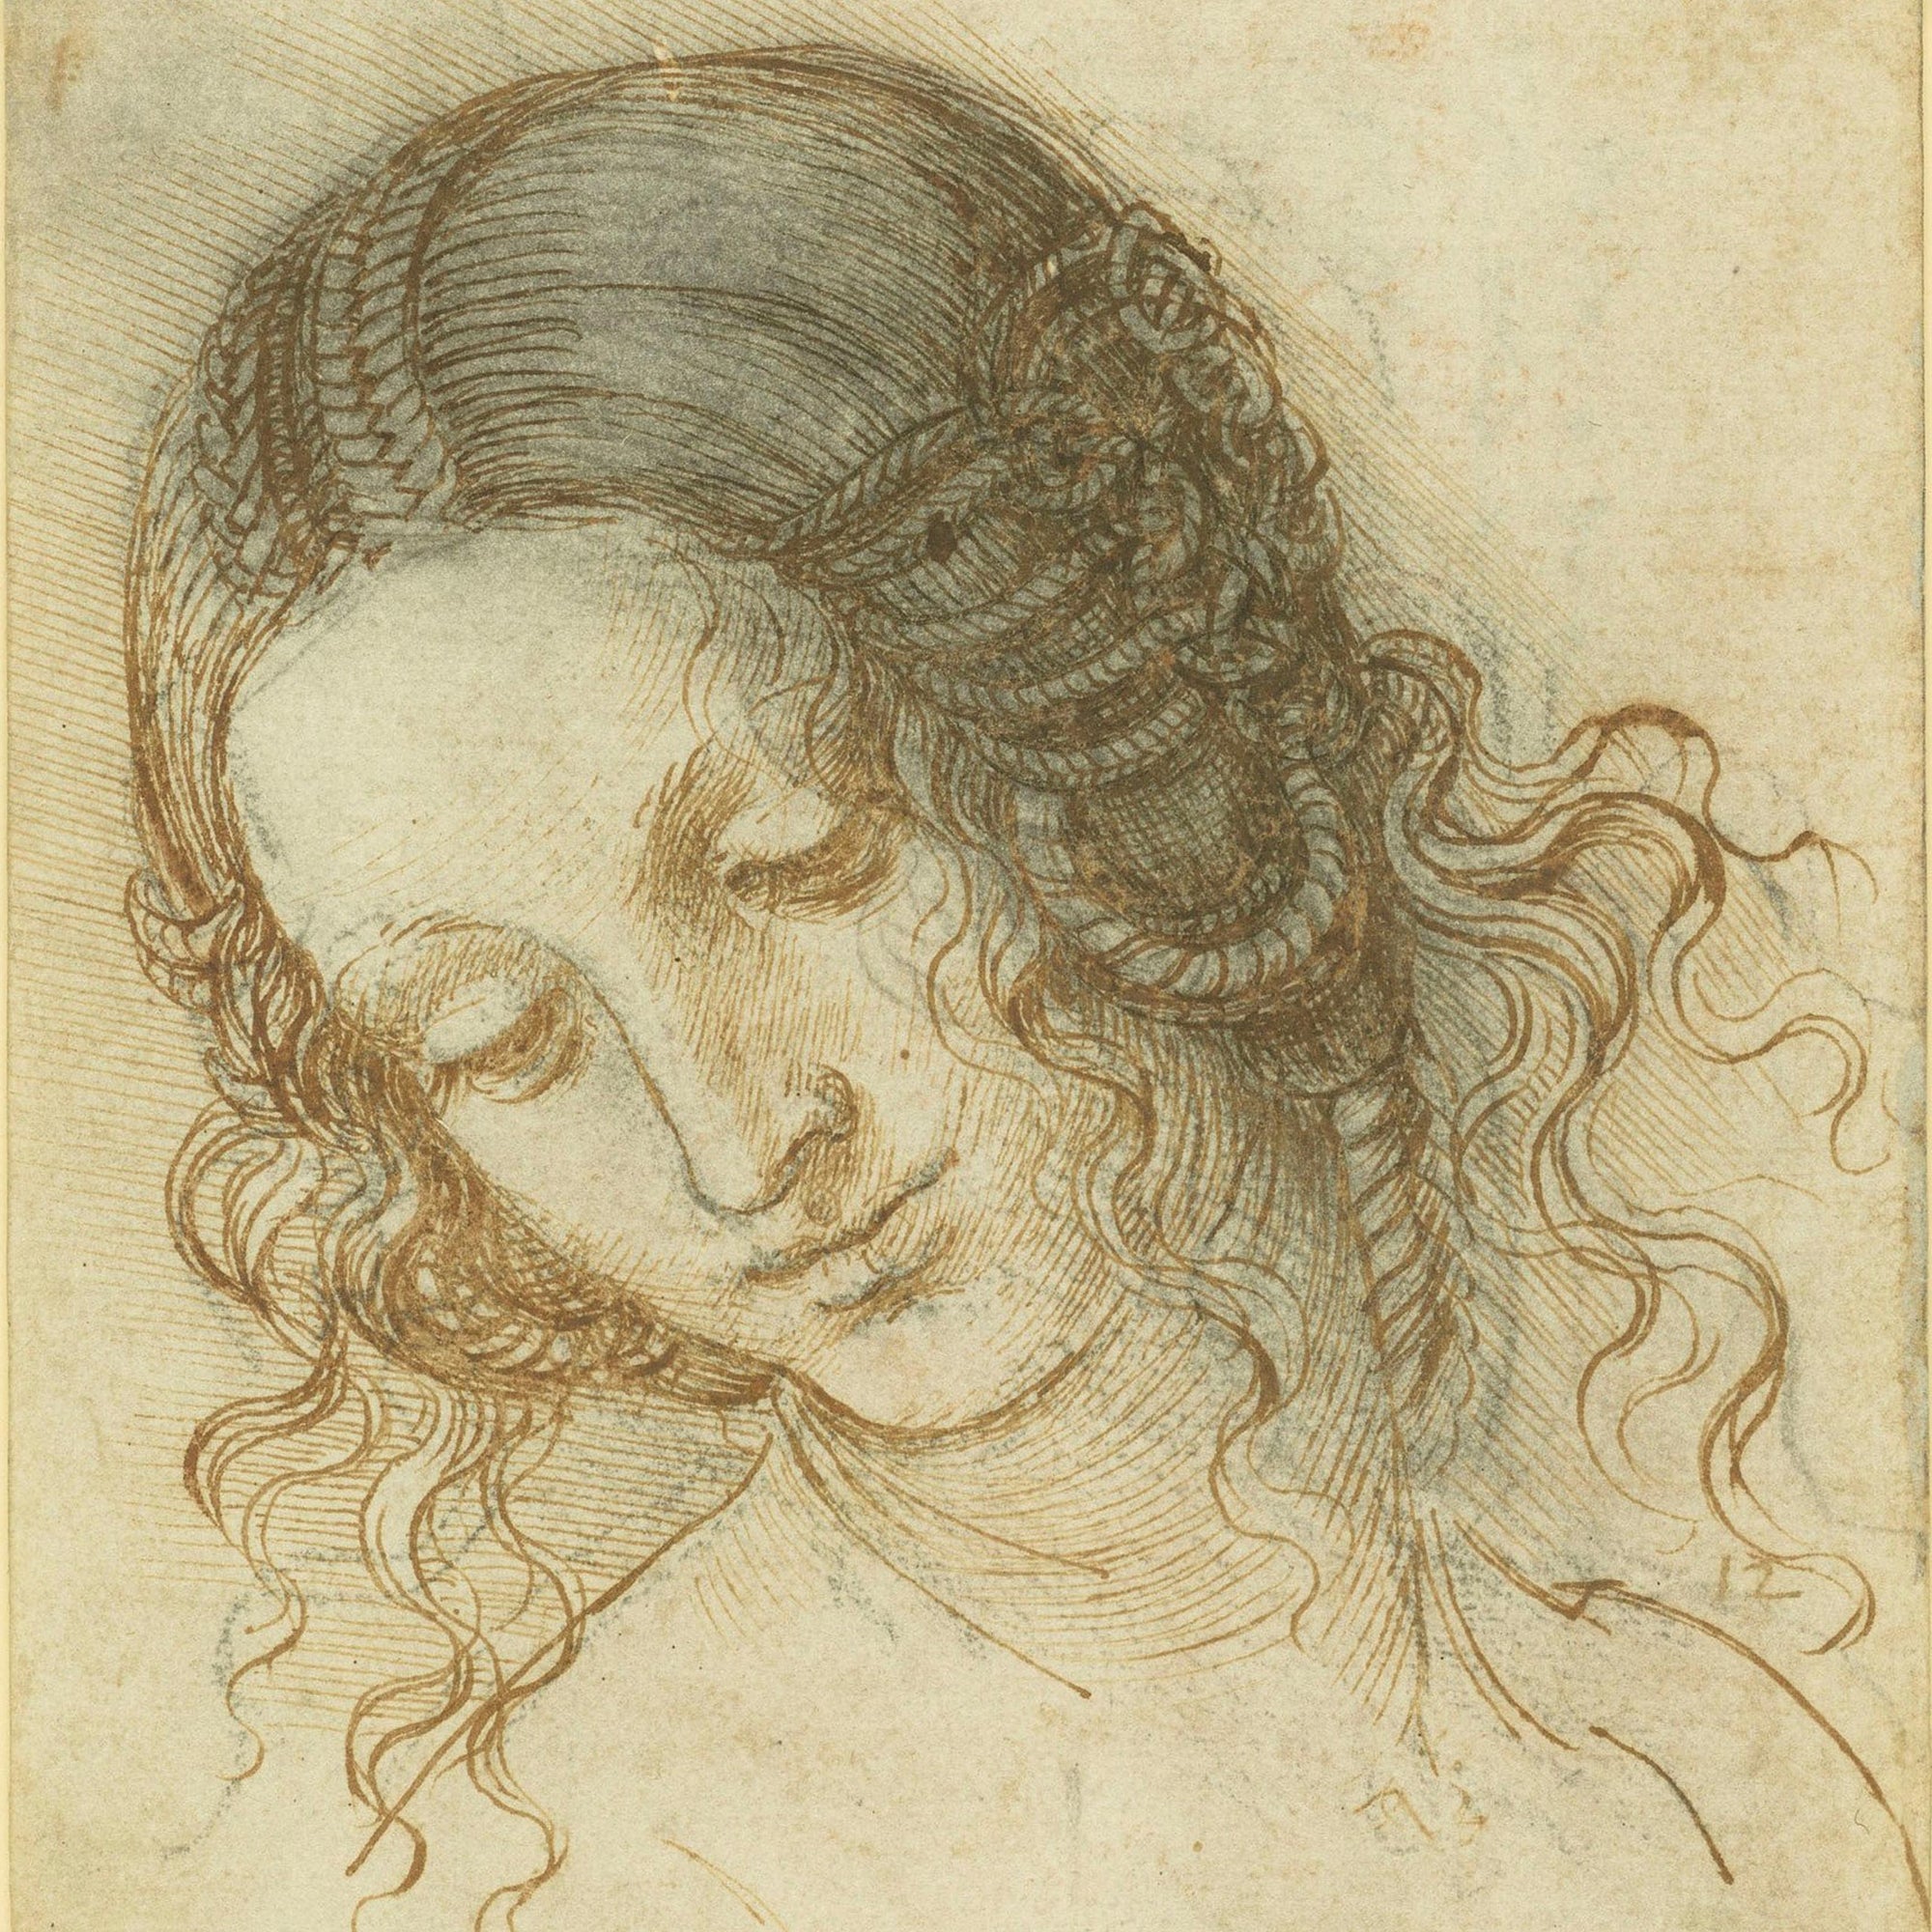 An Introduction to Leonardo Da Vinci's Anatomical Drawings